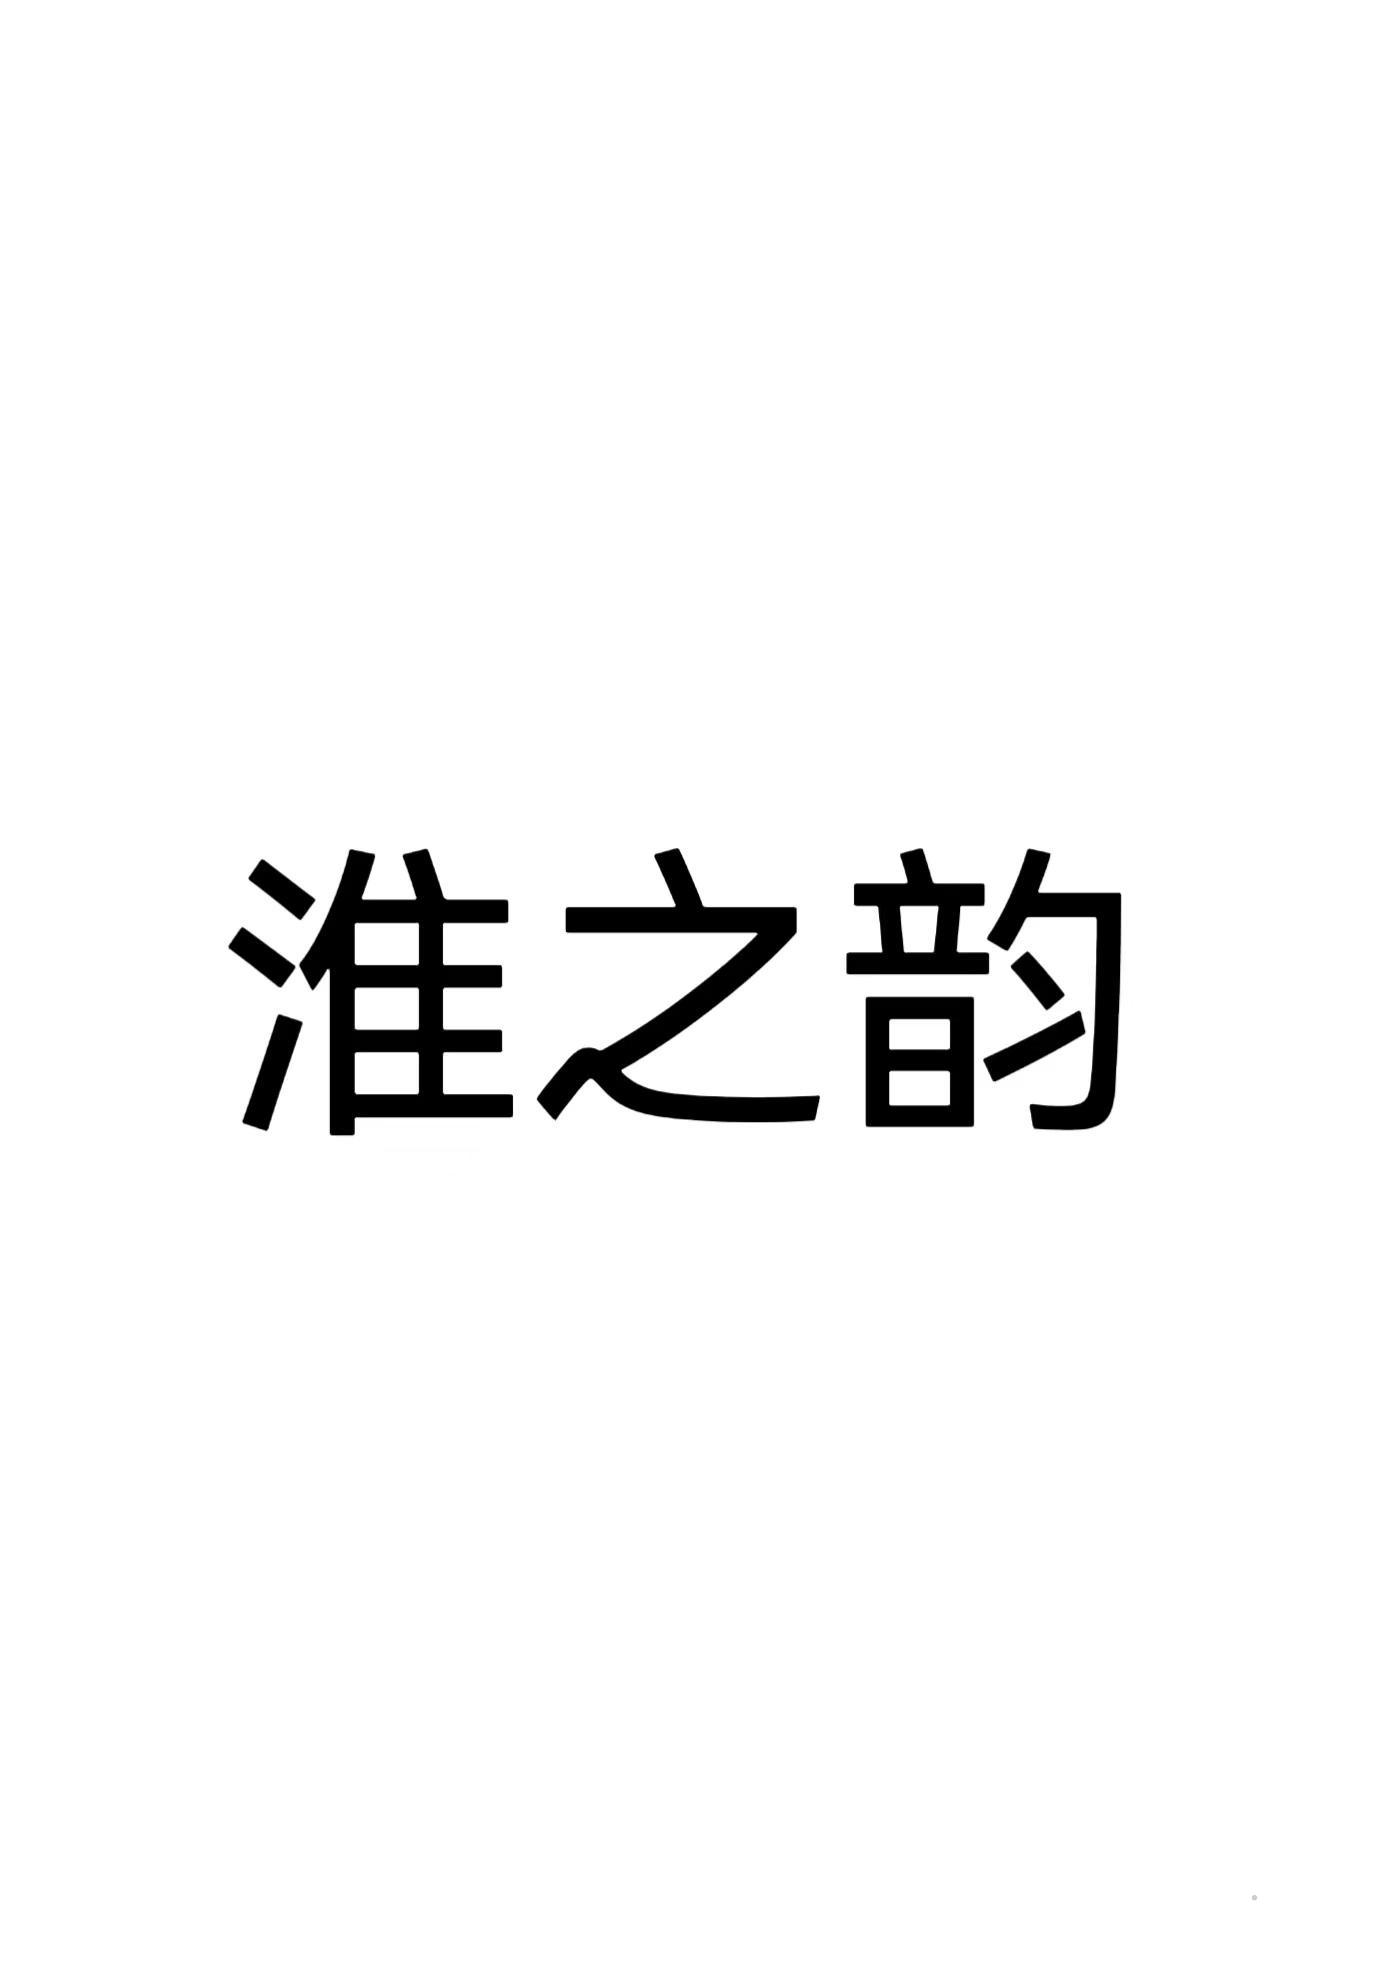 淮之韵logo